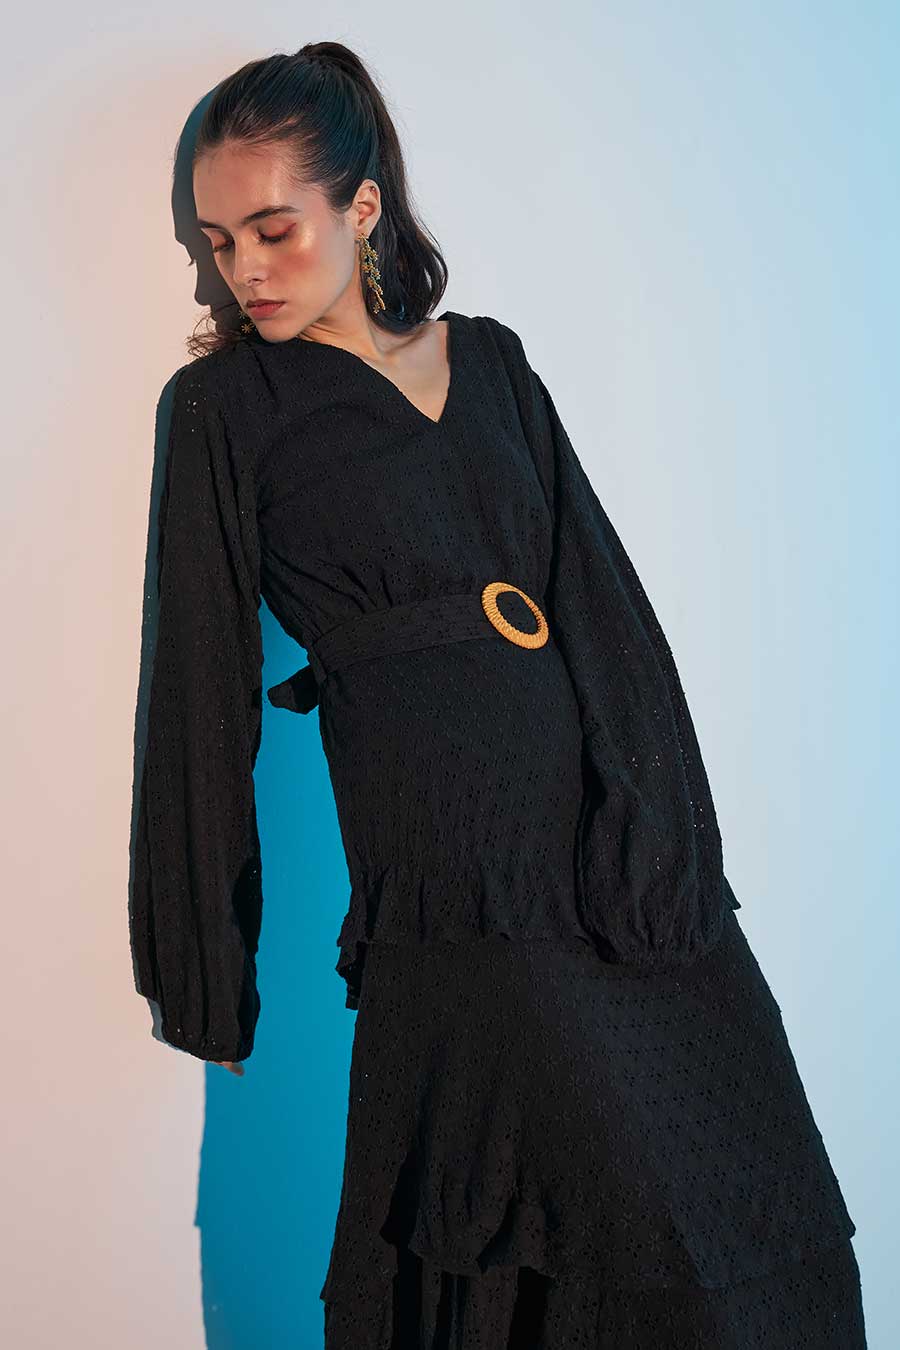 Black Schiffli Embroidered Maxi Dress